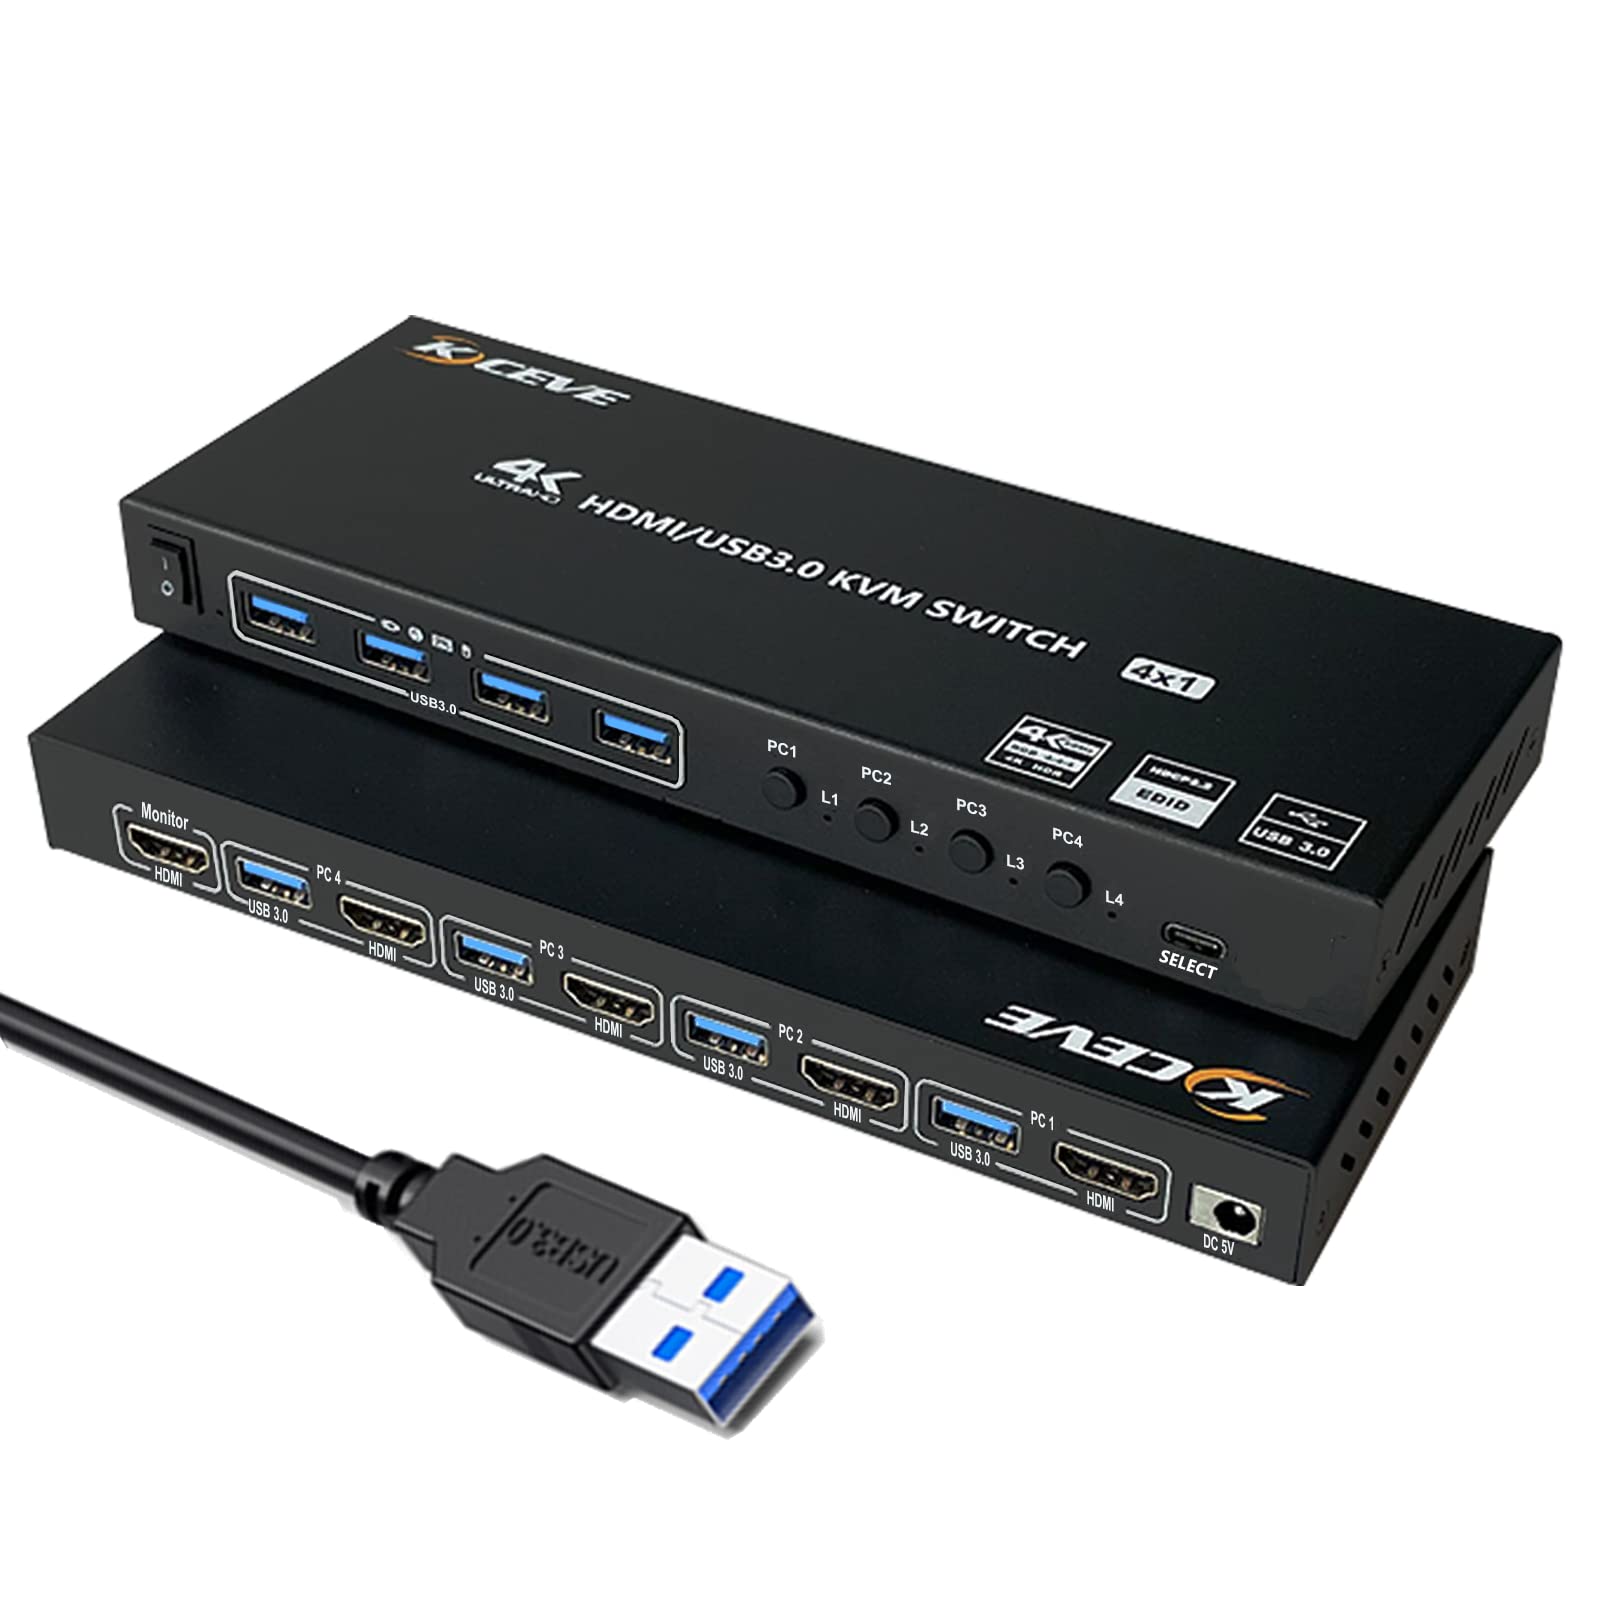 USB 3.0 KVM Switch HDMI 4 Port Support، USB Hub HDR EDID HDMI USB Switch 4 in 1 Out و 4 USB 3.0 Port لطباعة لوحة المفاتيح والماوس